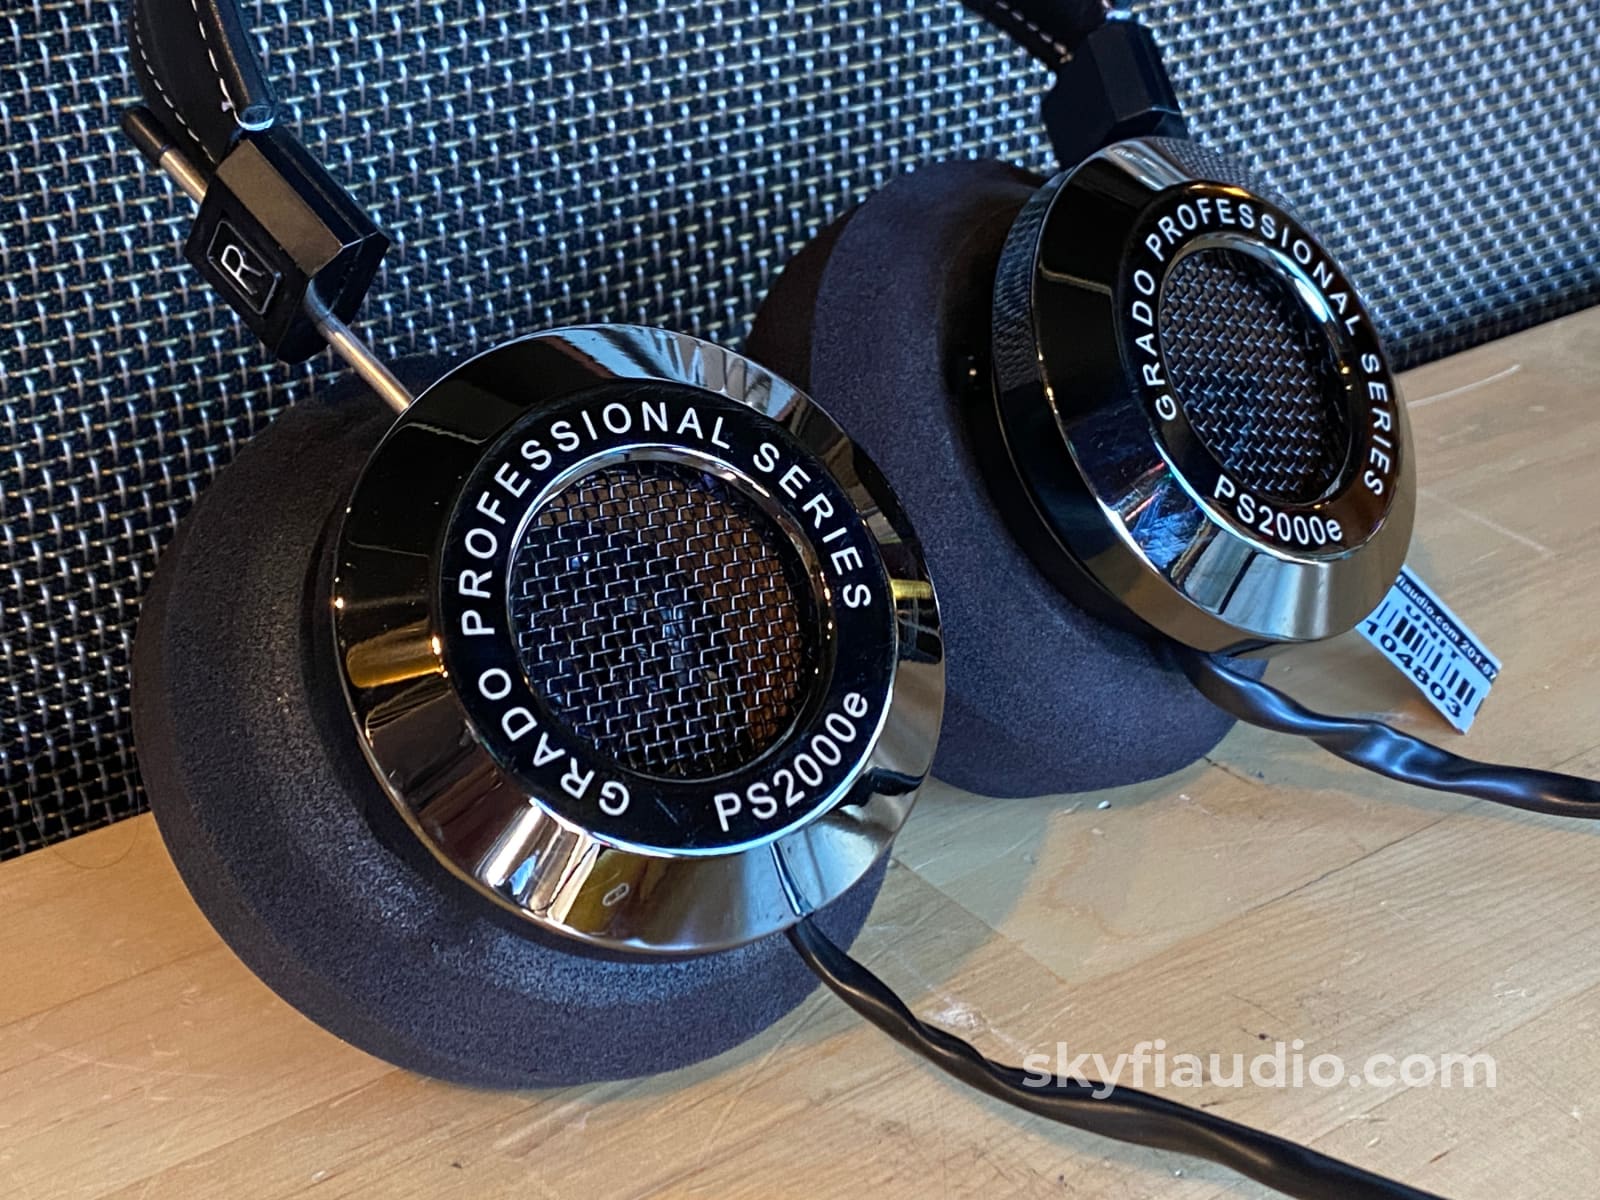 Grado Ps2000E Professional Series Headphones